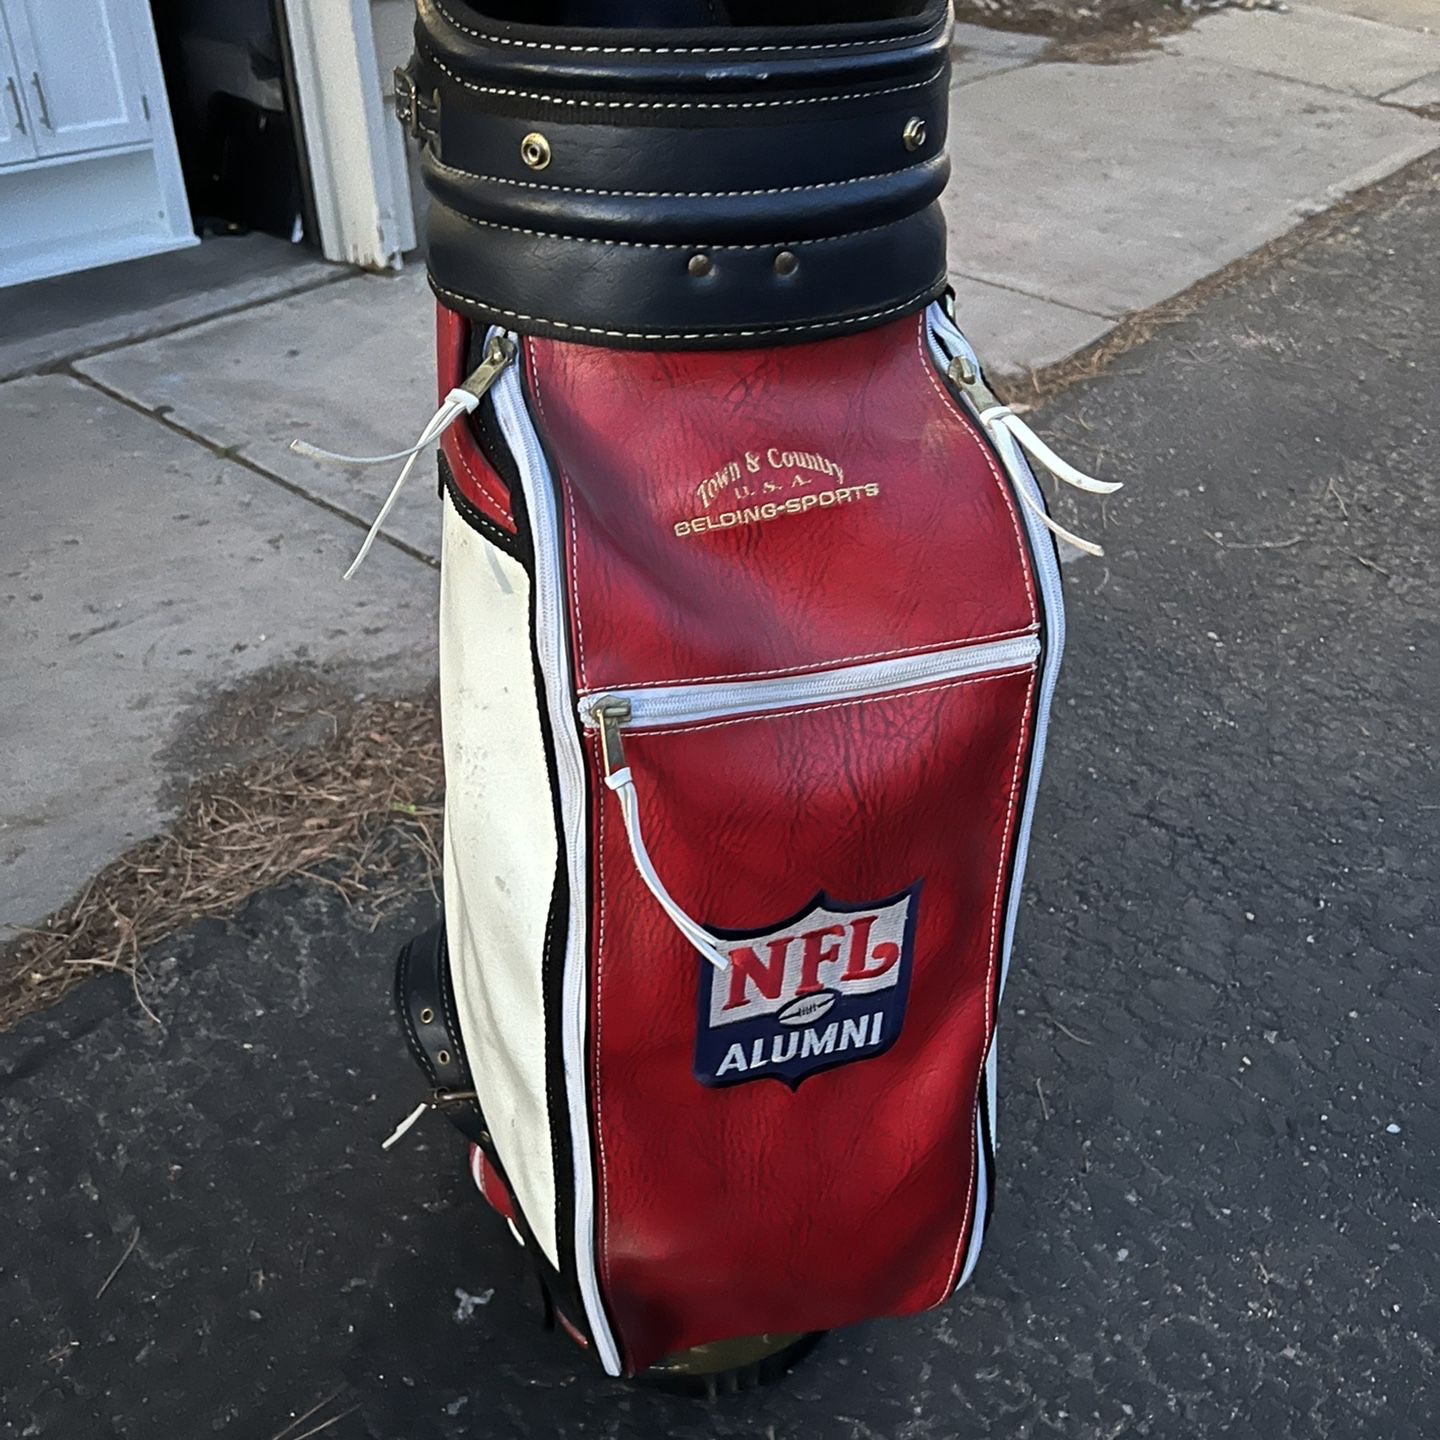 Golfheadz on X: LV vintage golf bag. 👀 📸 via @depop #golfheadz